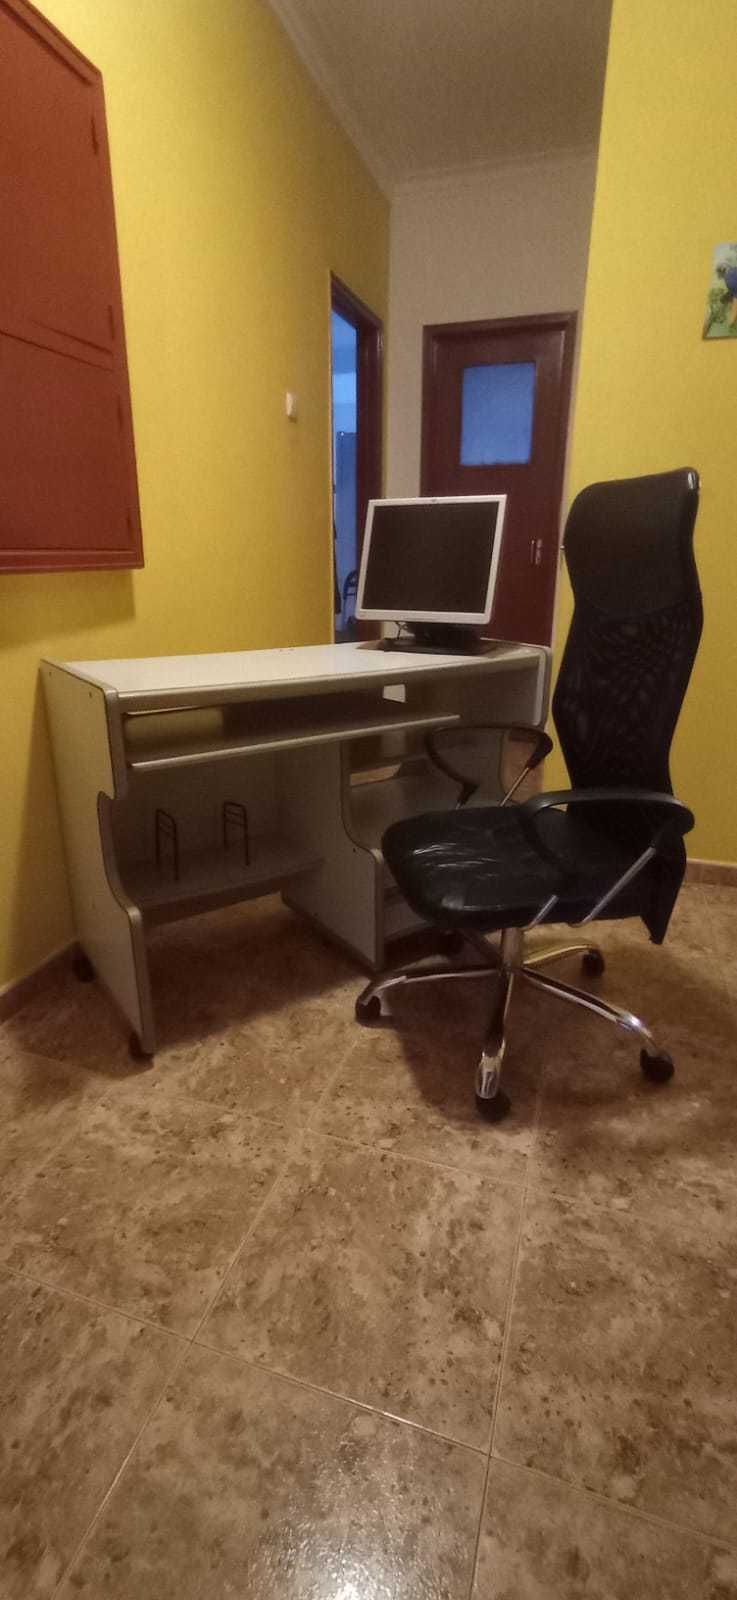 Secretaria + Cadeira + Monitor HP